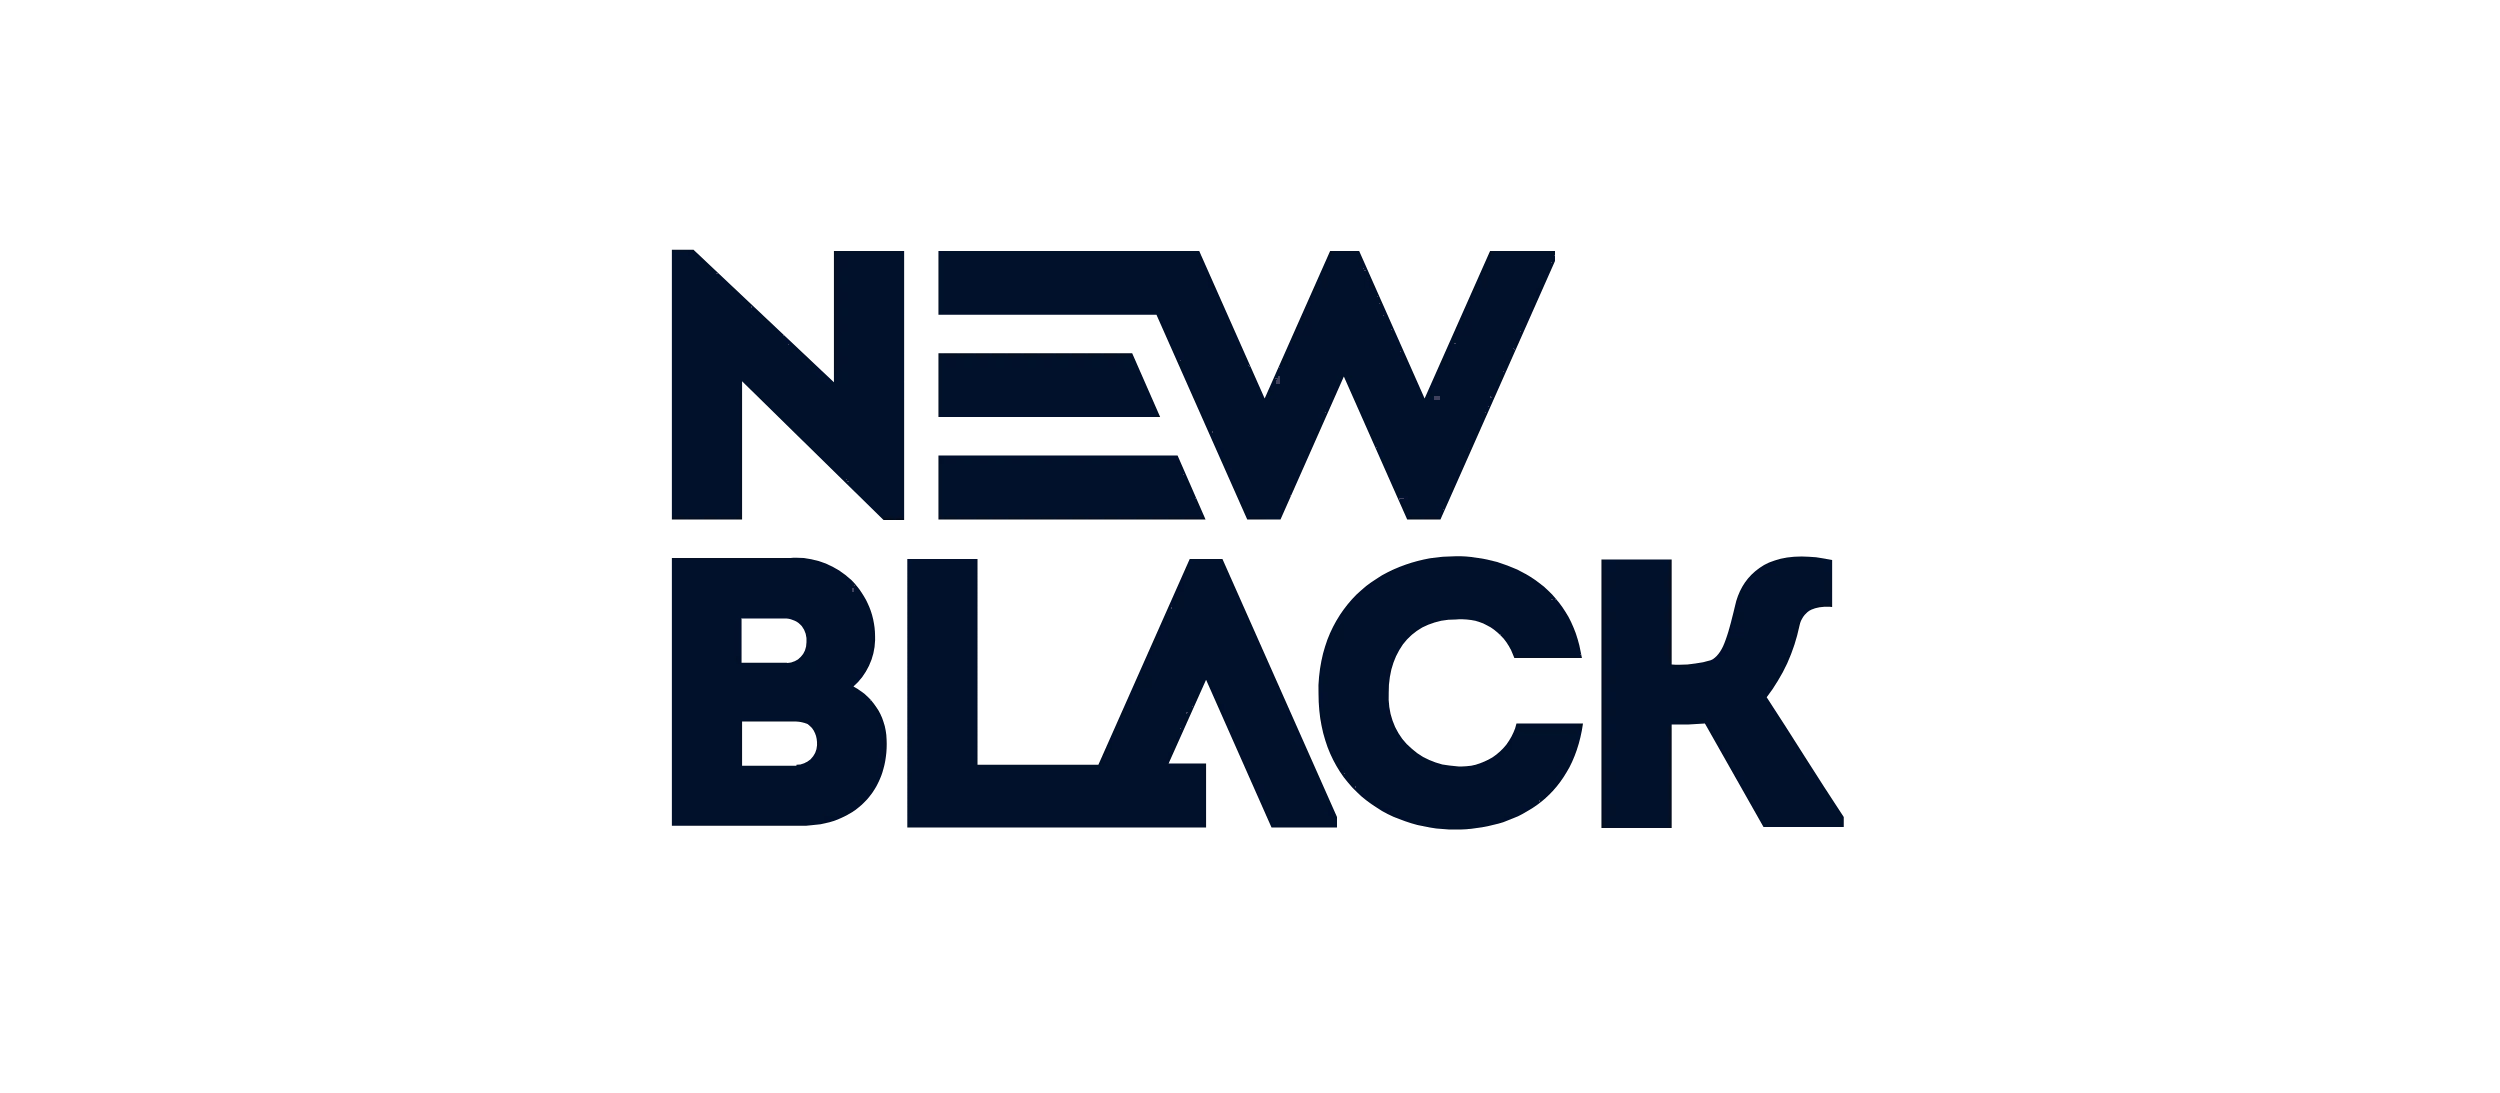 New Black logo